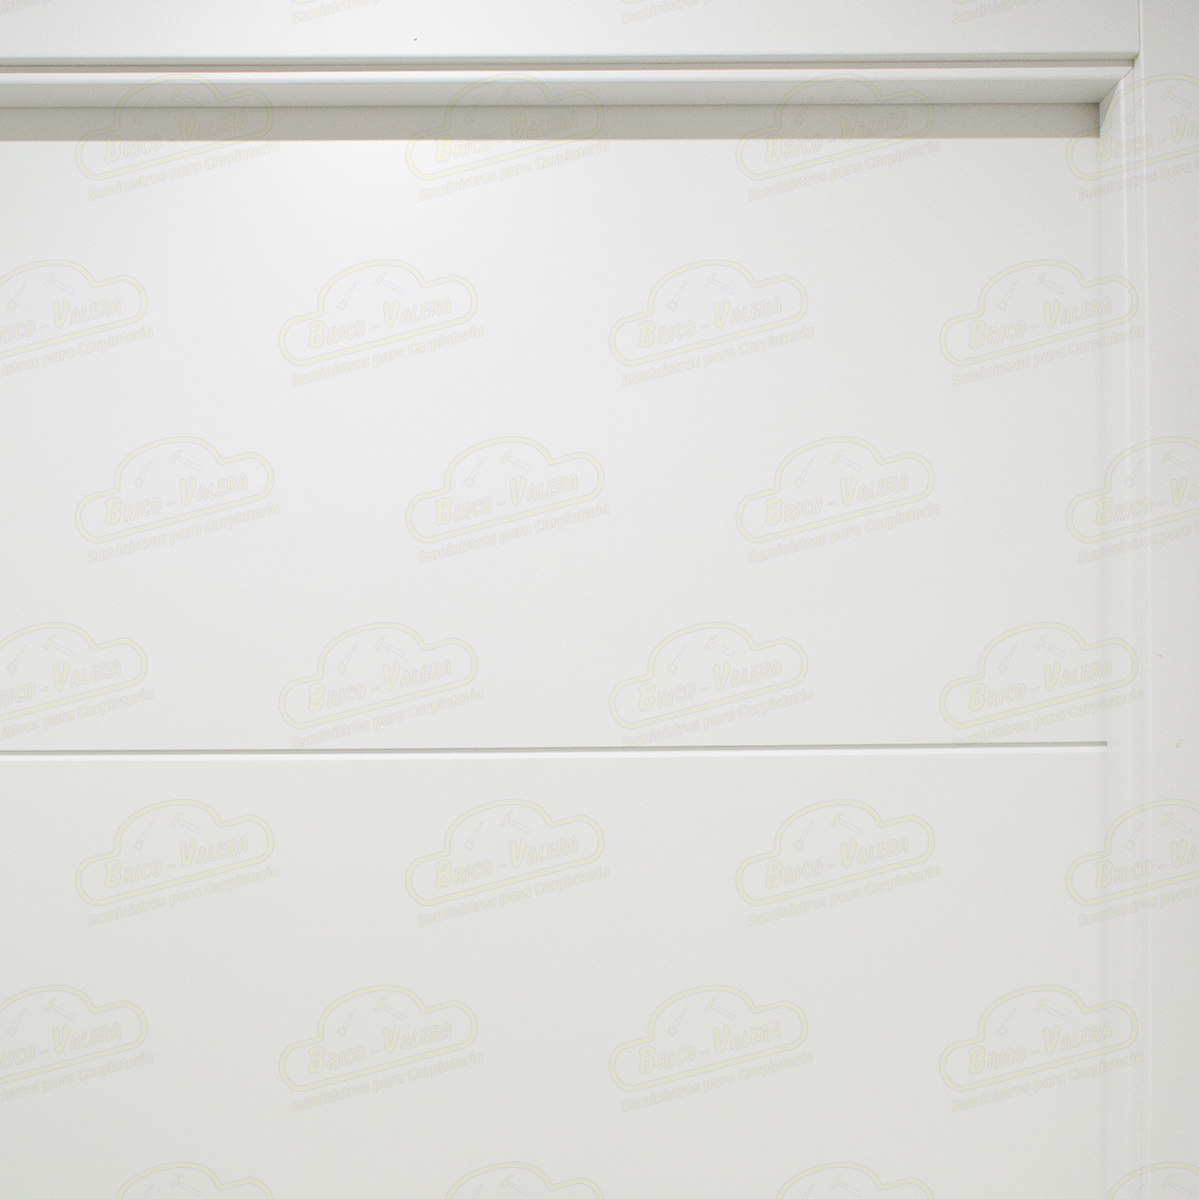 Puerta Premium PVT5-BV4 Lacada Blanca de Interior en Block (Maciza) PROMO: CRISTALES MATE GRATIS